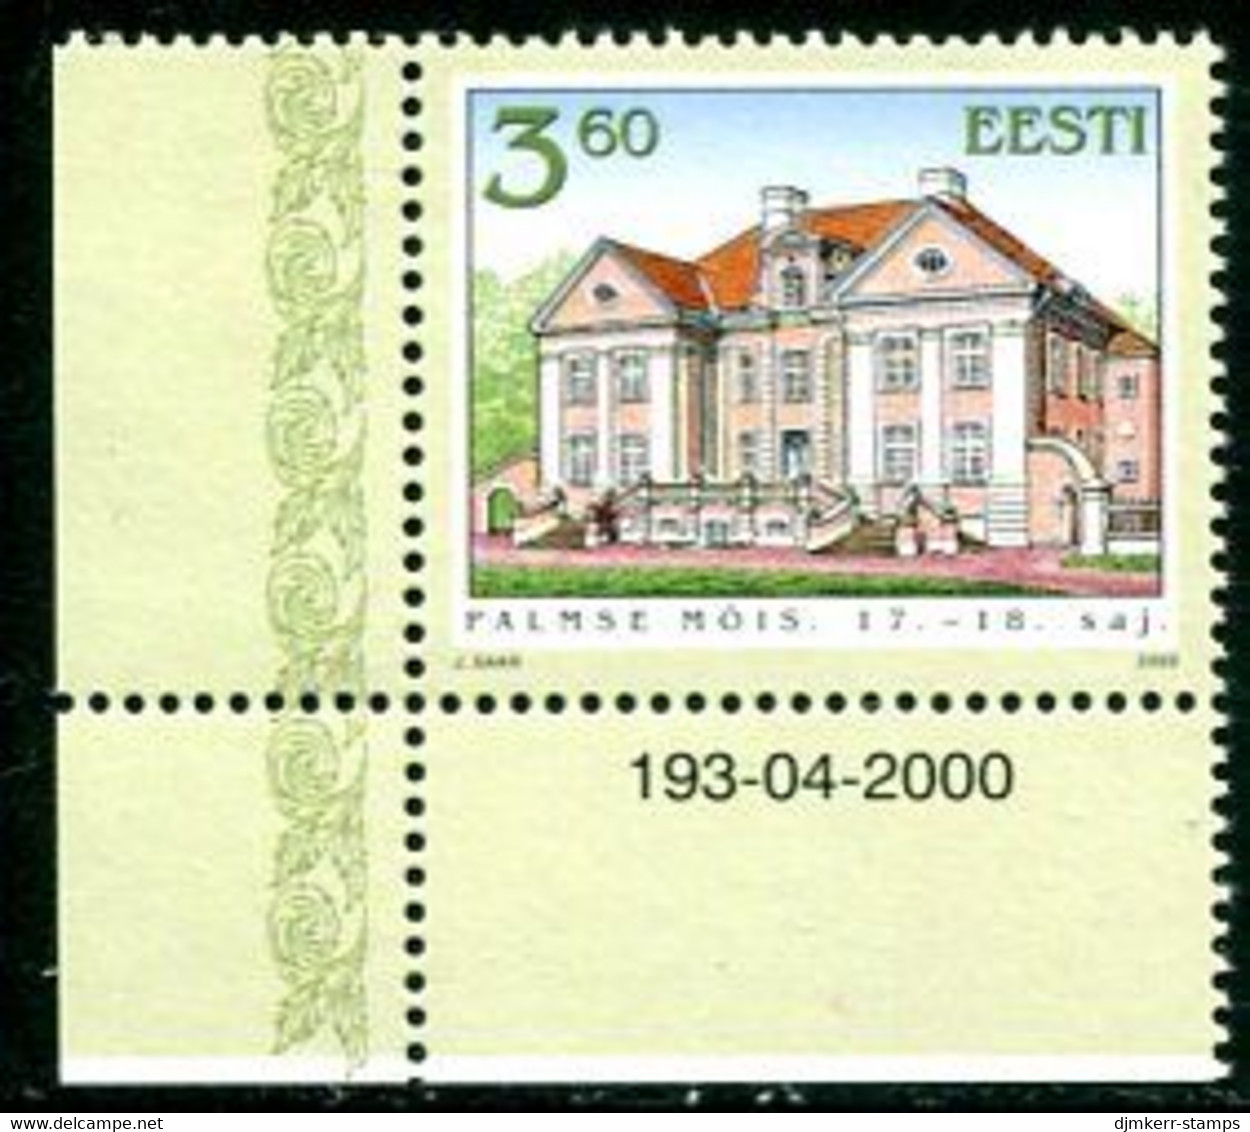 ESTONIA 2000 Palmse Manor House   MNH / **.  Michel 372 - Estonia